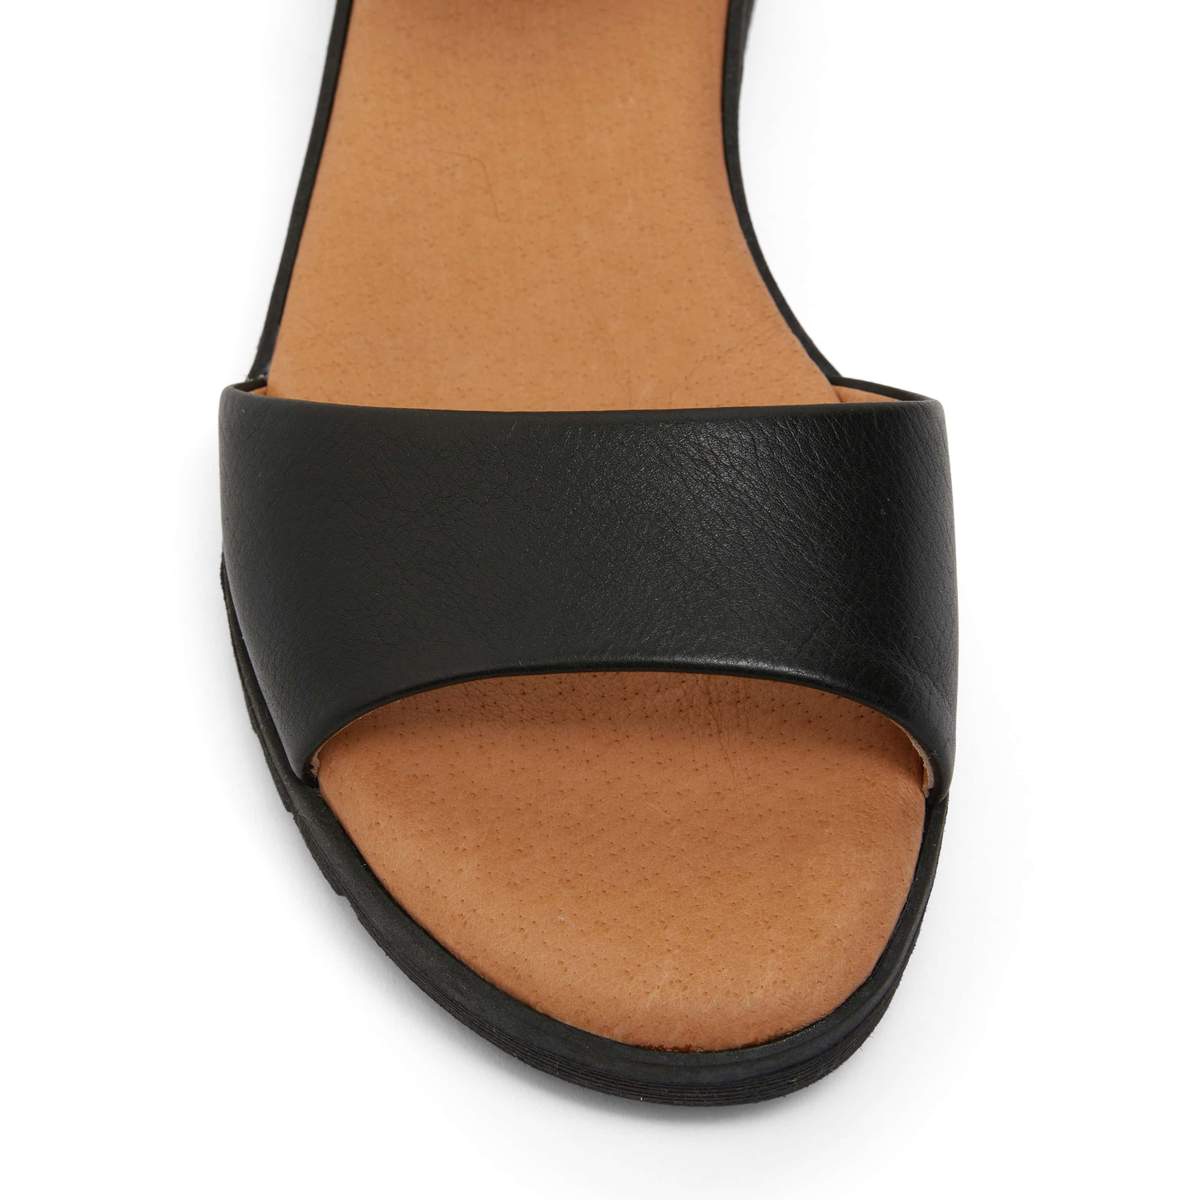 GEORGIE leather sandal - Easy Step - 36, 37, 38, 39, 40, 41, BLACK, sandals, TAN, womens footwear - Stomp Shoes Darwin